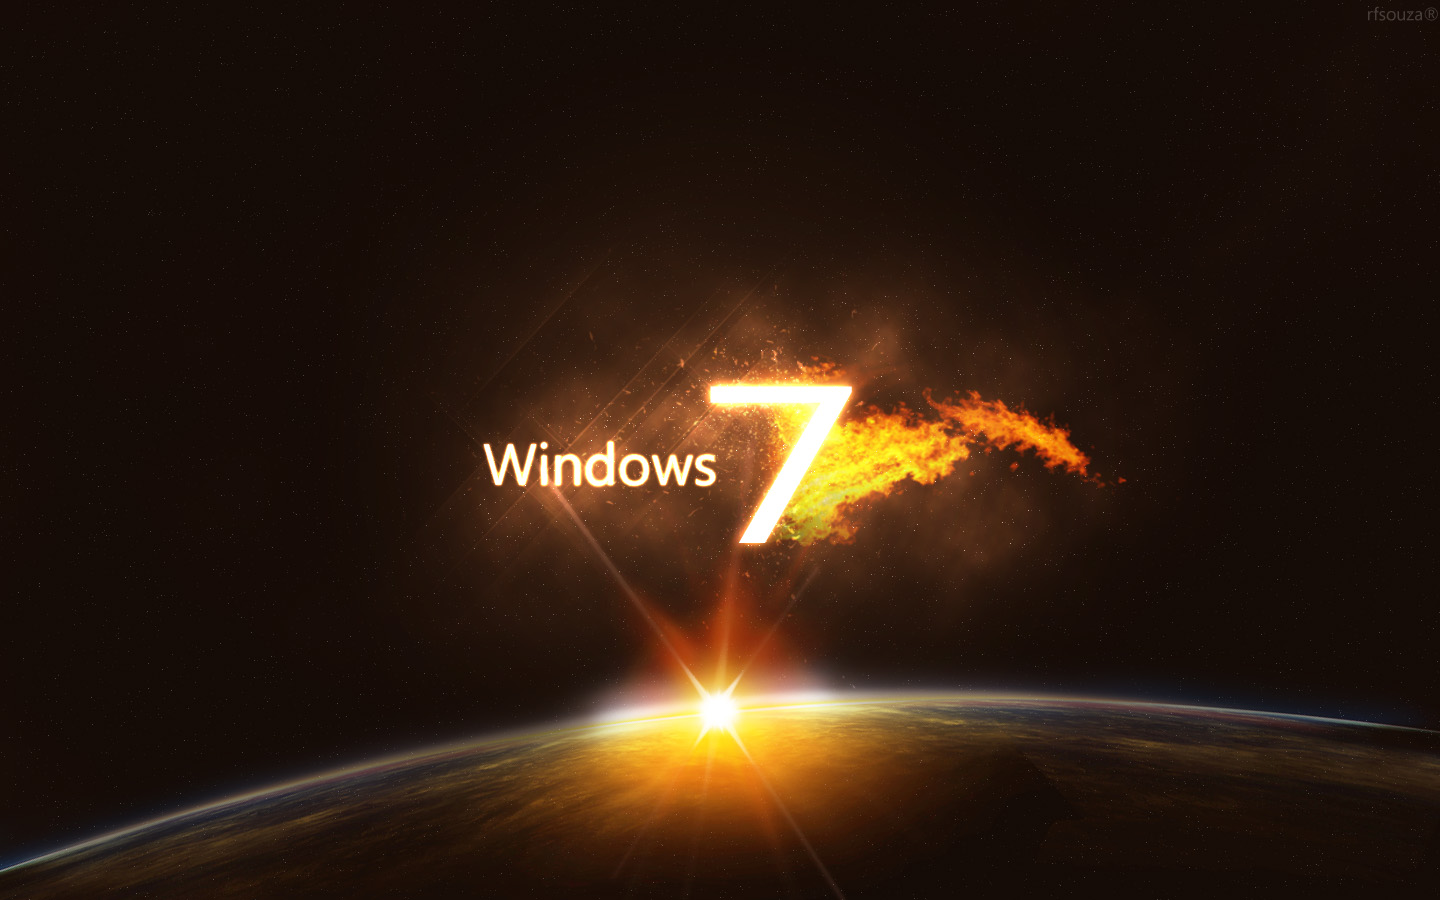 Фото Windows 7